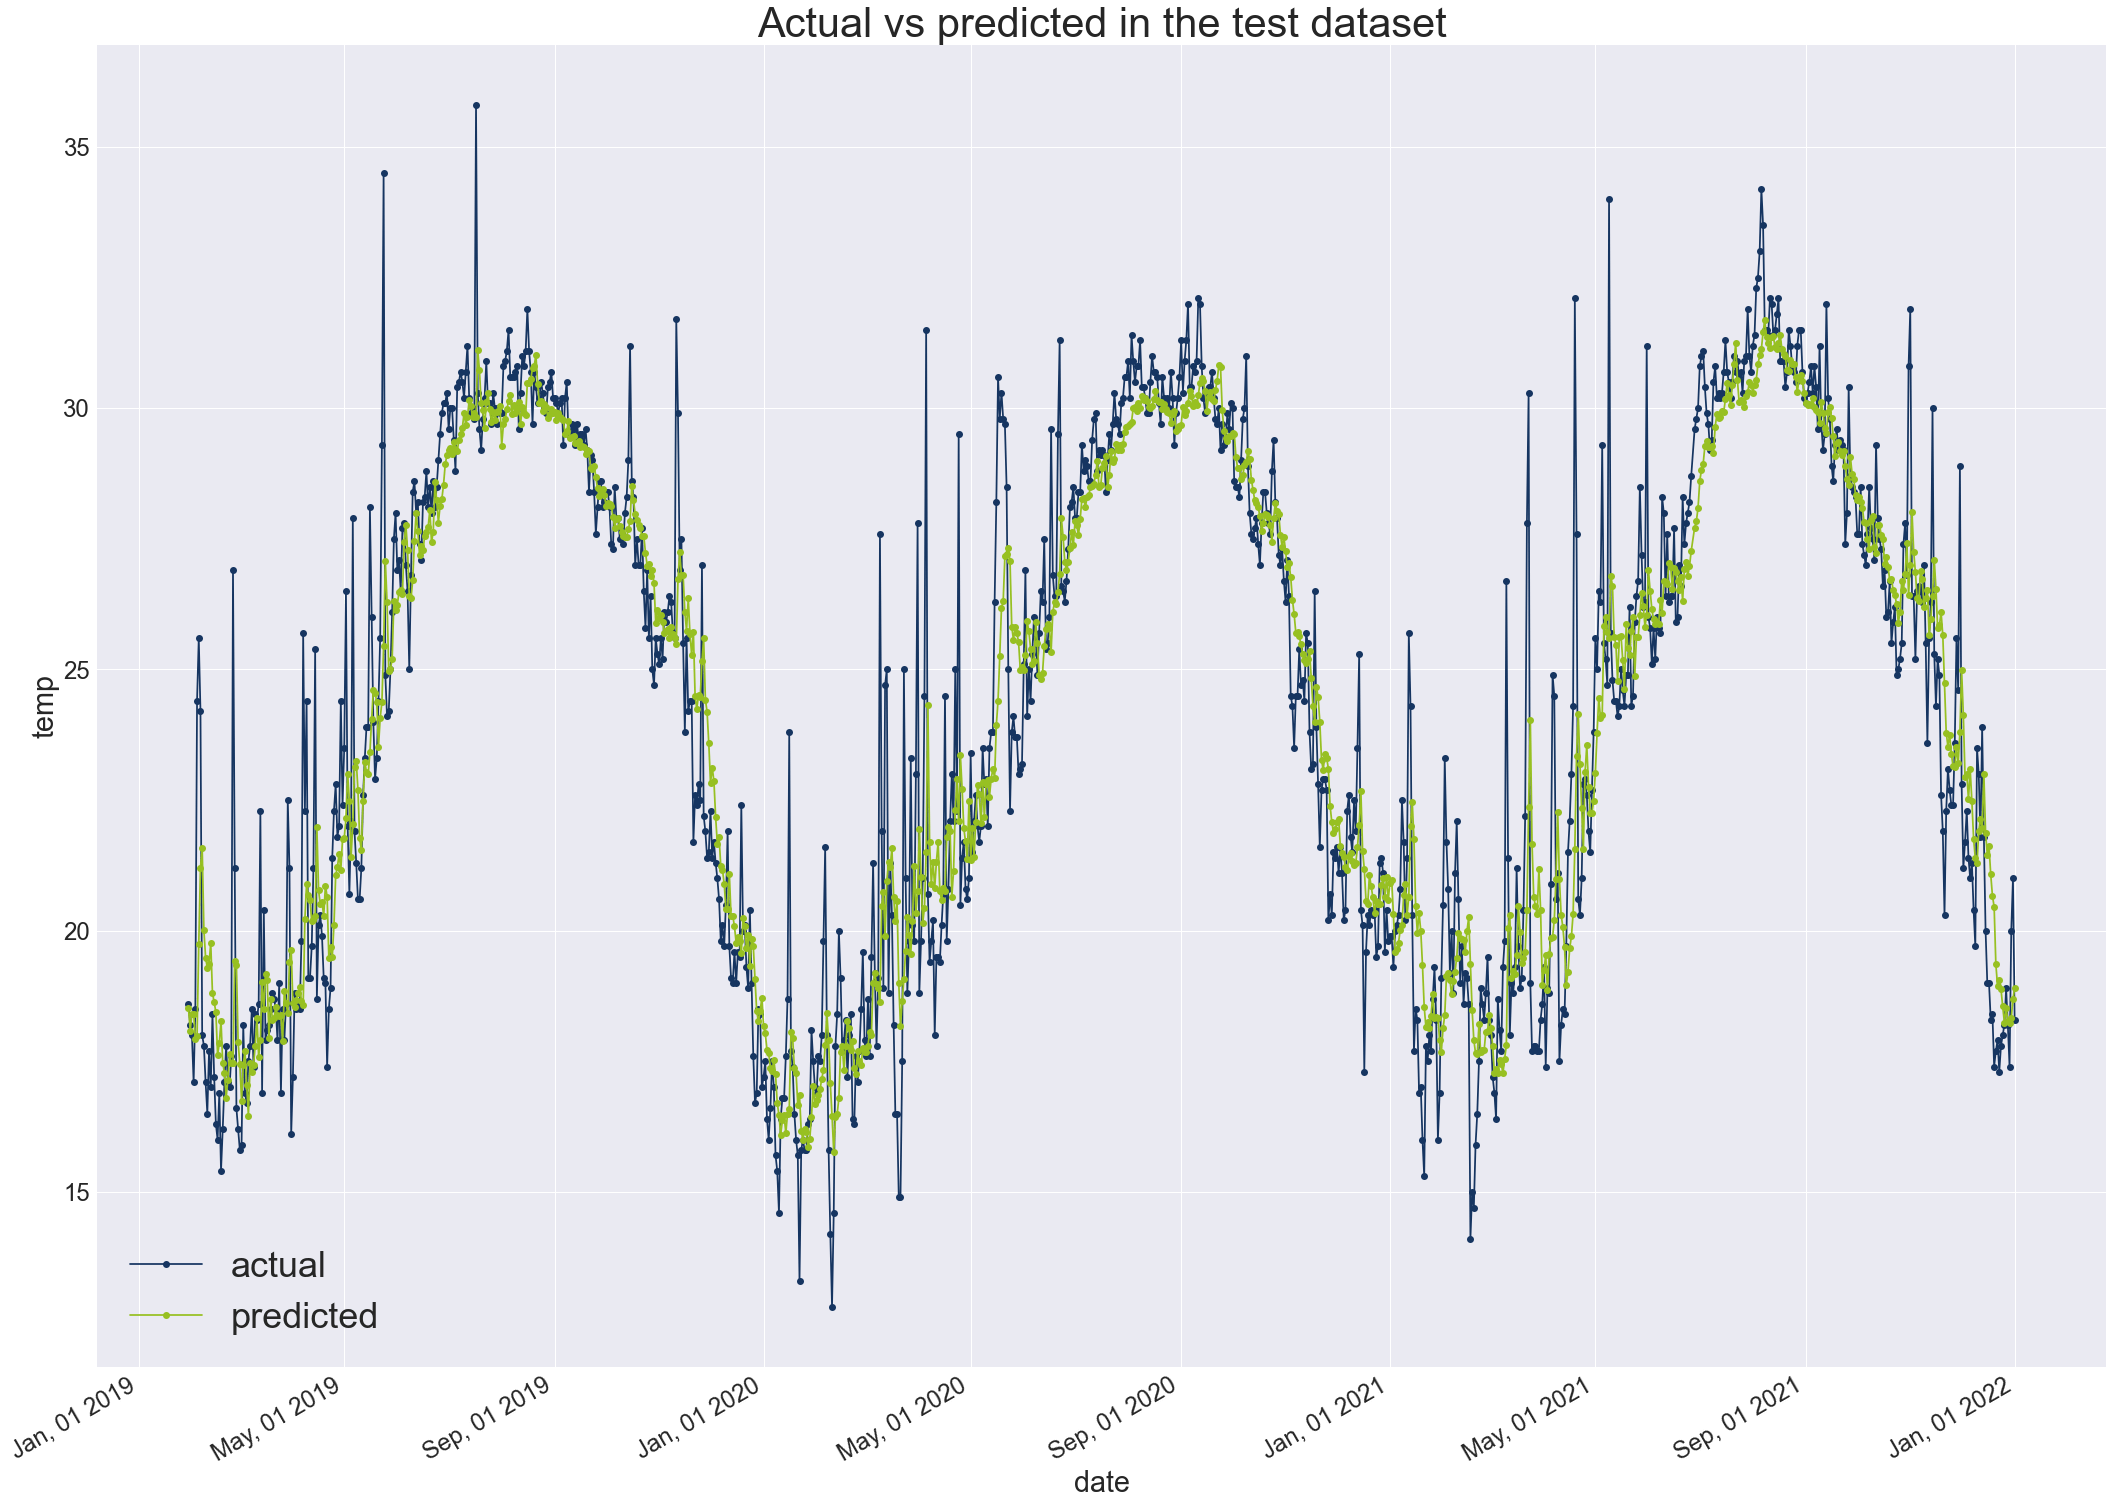 actual temperatures vs model predictions in the test dataset